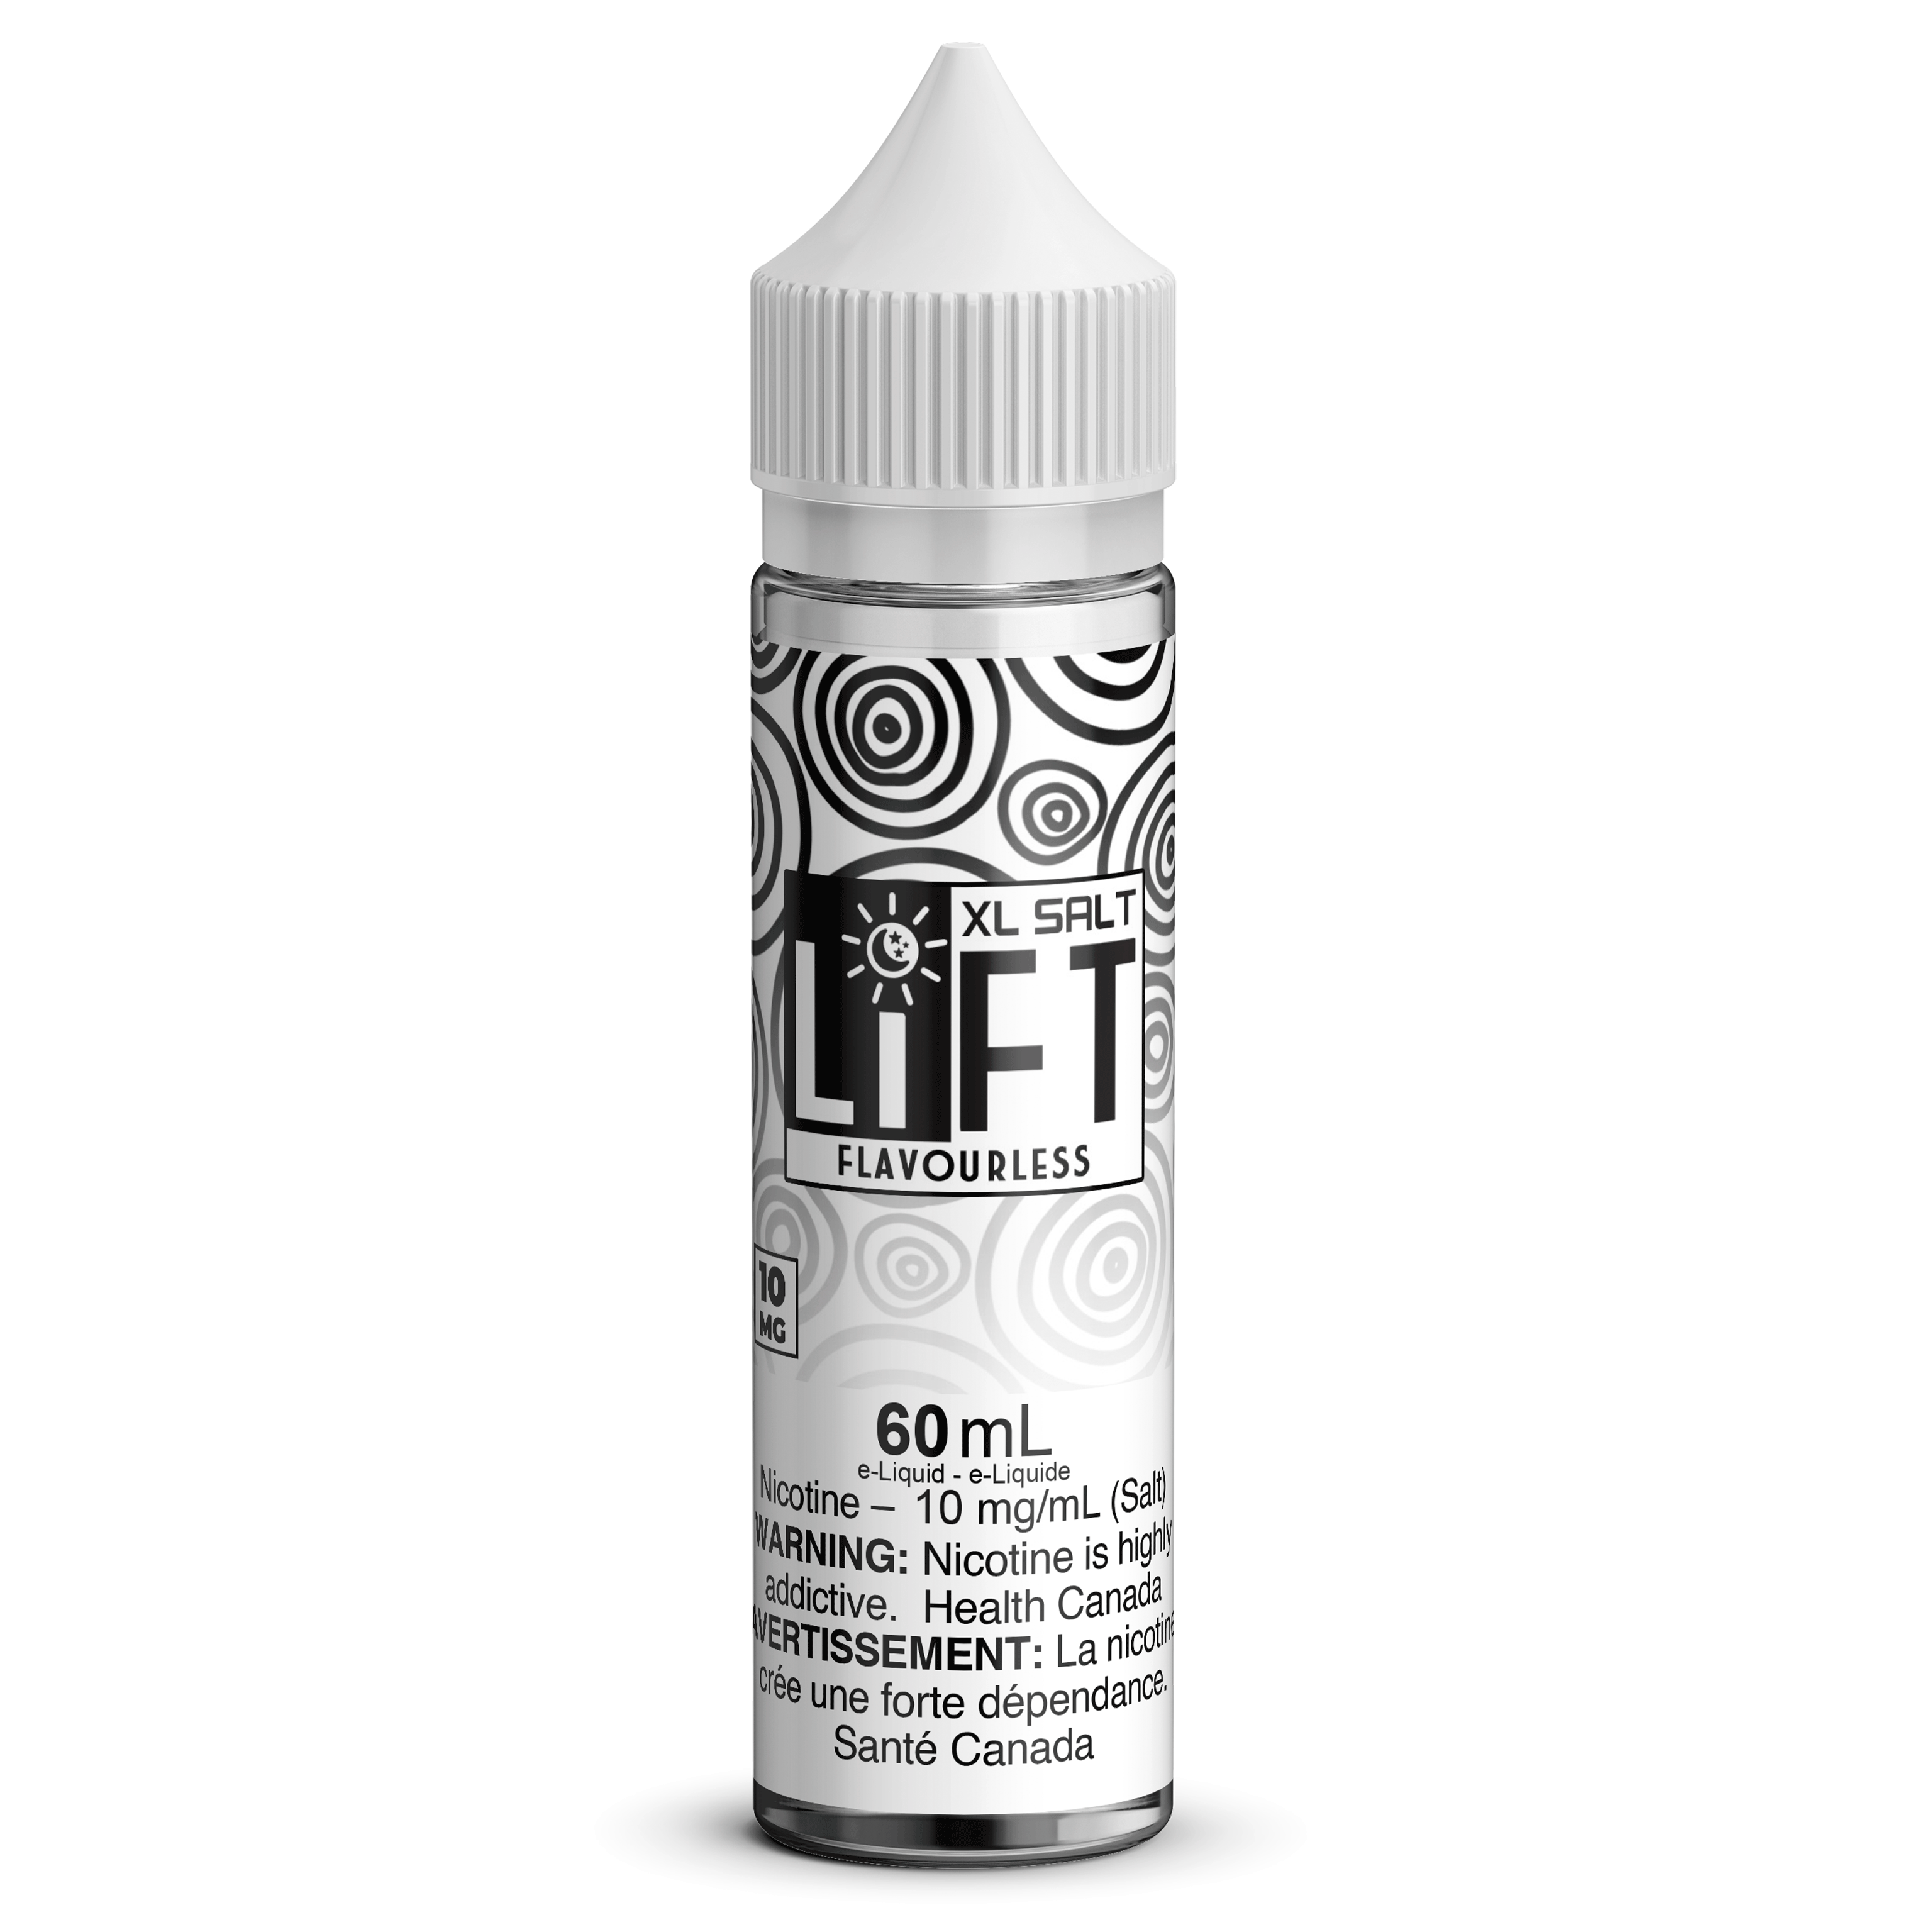 LIFT XL SALT - Flavourless available on Canada online vape shop